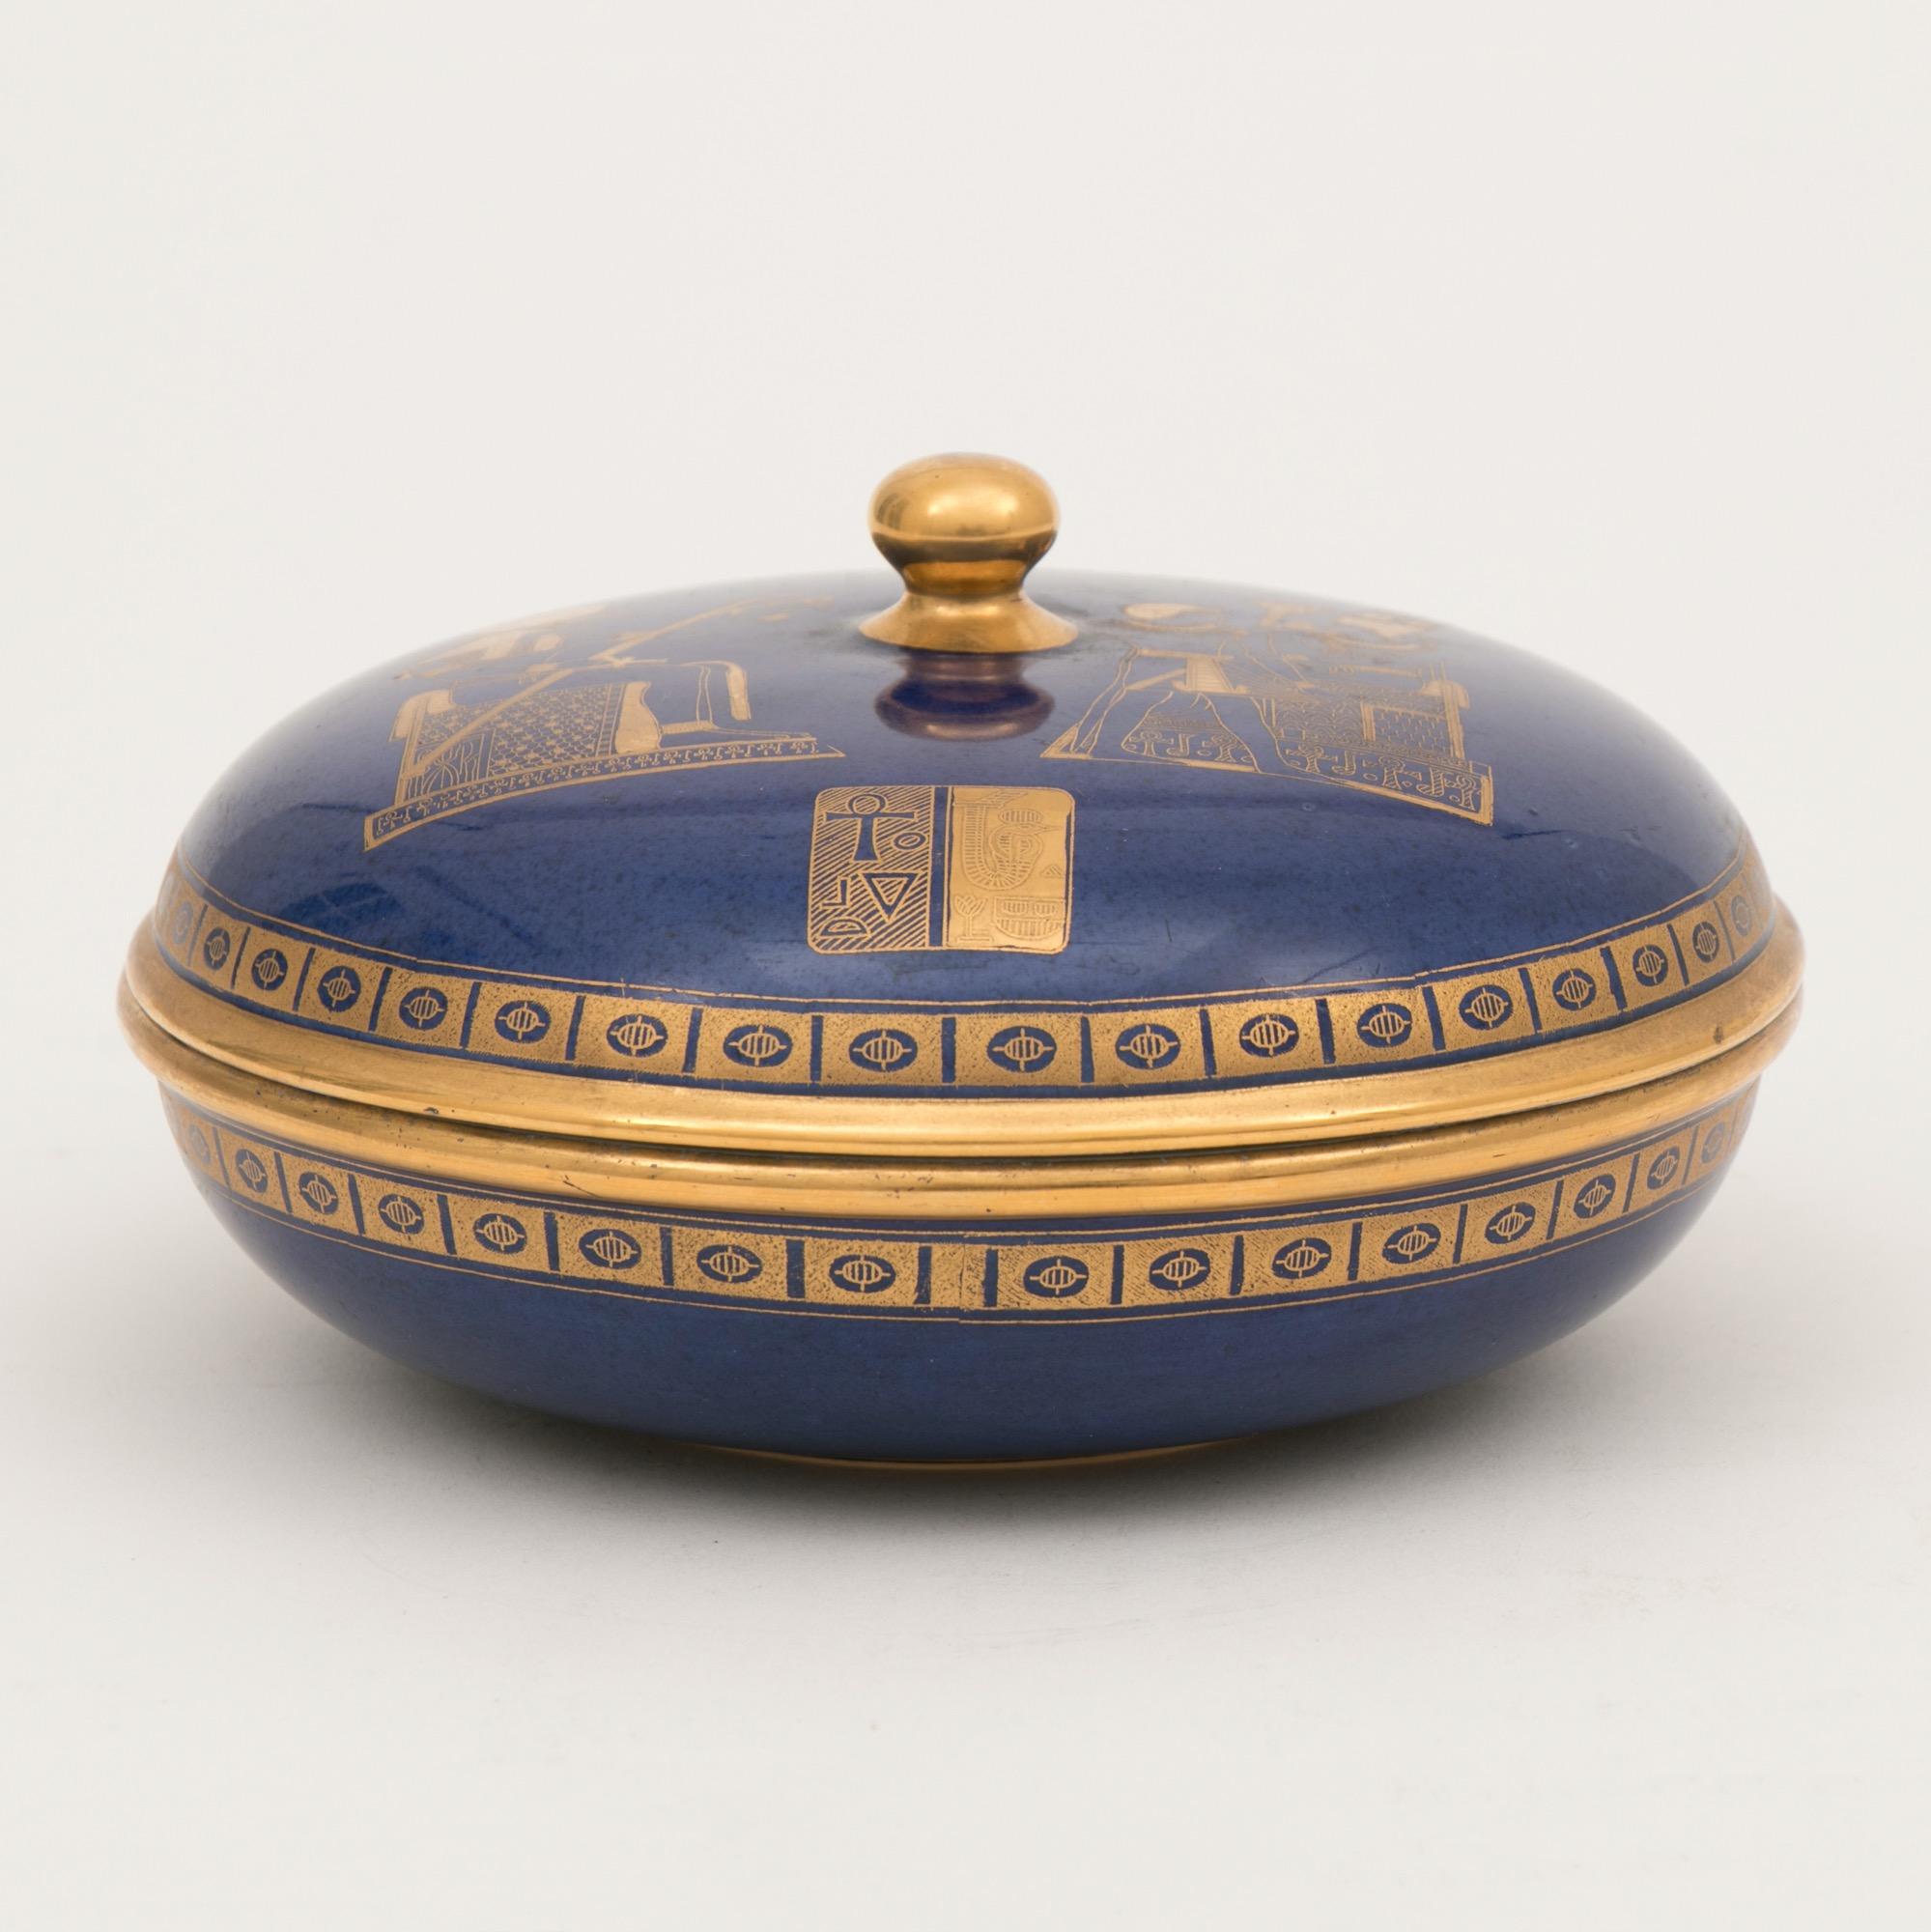 Art Deco Carltonware covered bowl designed by Enoch Boulton, with the Tutankhamun design 22-carat gilt decoration.
Measures: H 10cm, W 18cm, D 18cm
British, circa 1925

Carlton ware created this design to celebrate the opening of Tutankhamun's